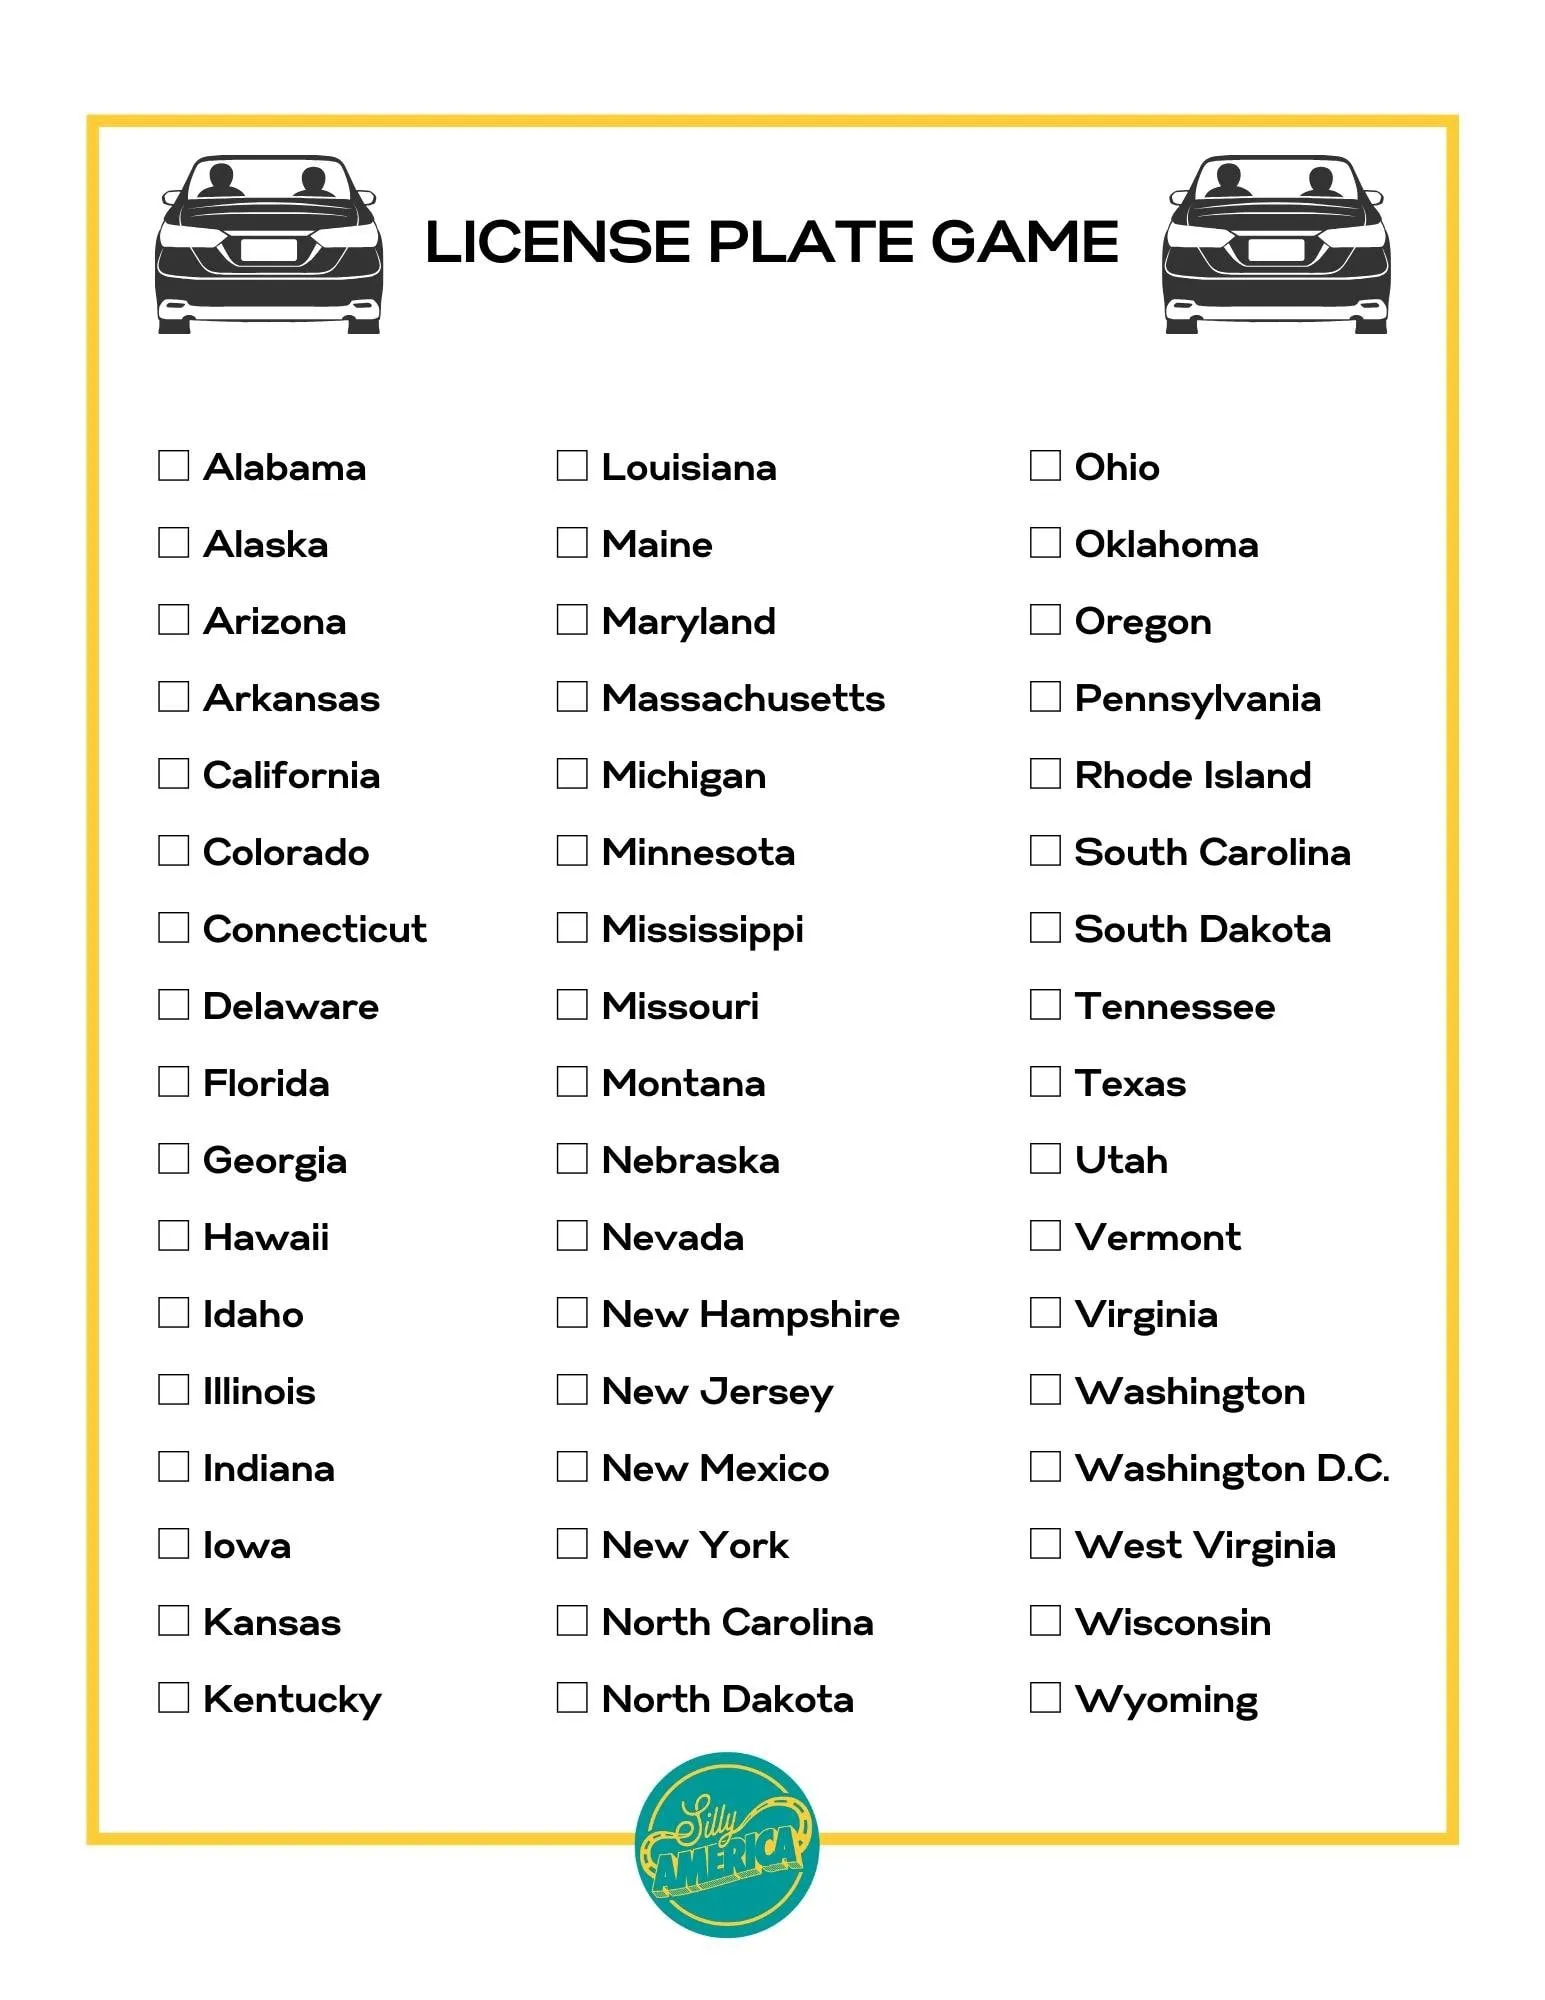 License plate game printable checklist road trip game